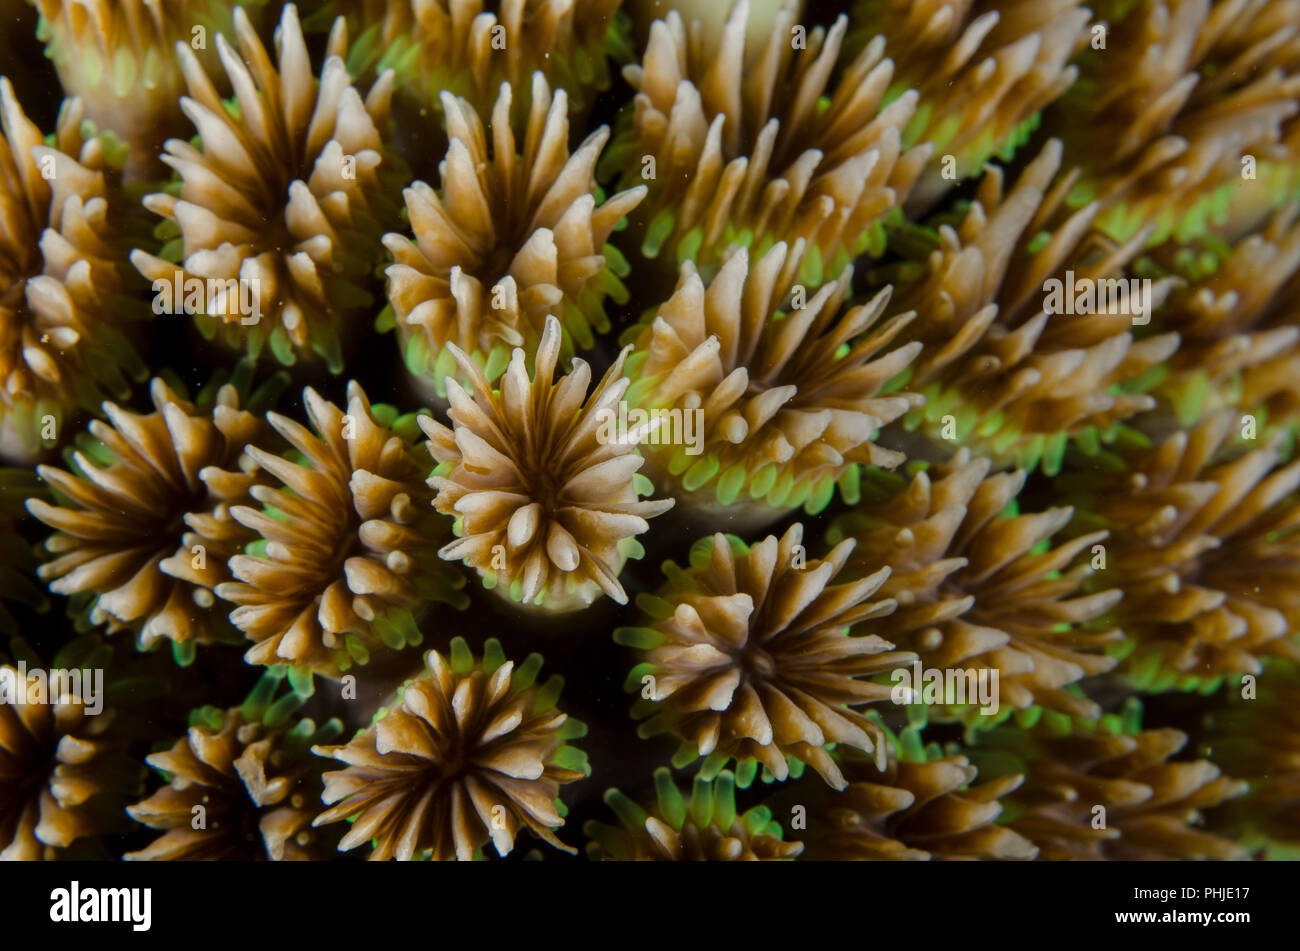 Galaxy Coral, Galaxea fascicularis, Oculinidae,  Anilao, Philippines, Philippine Sea, Pacific Ocean, Asia Stock Photo